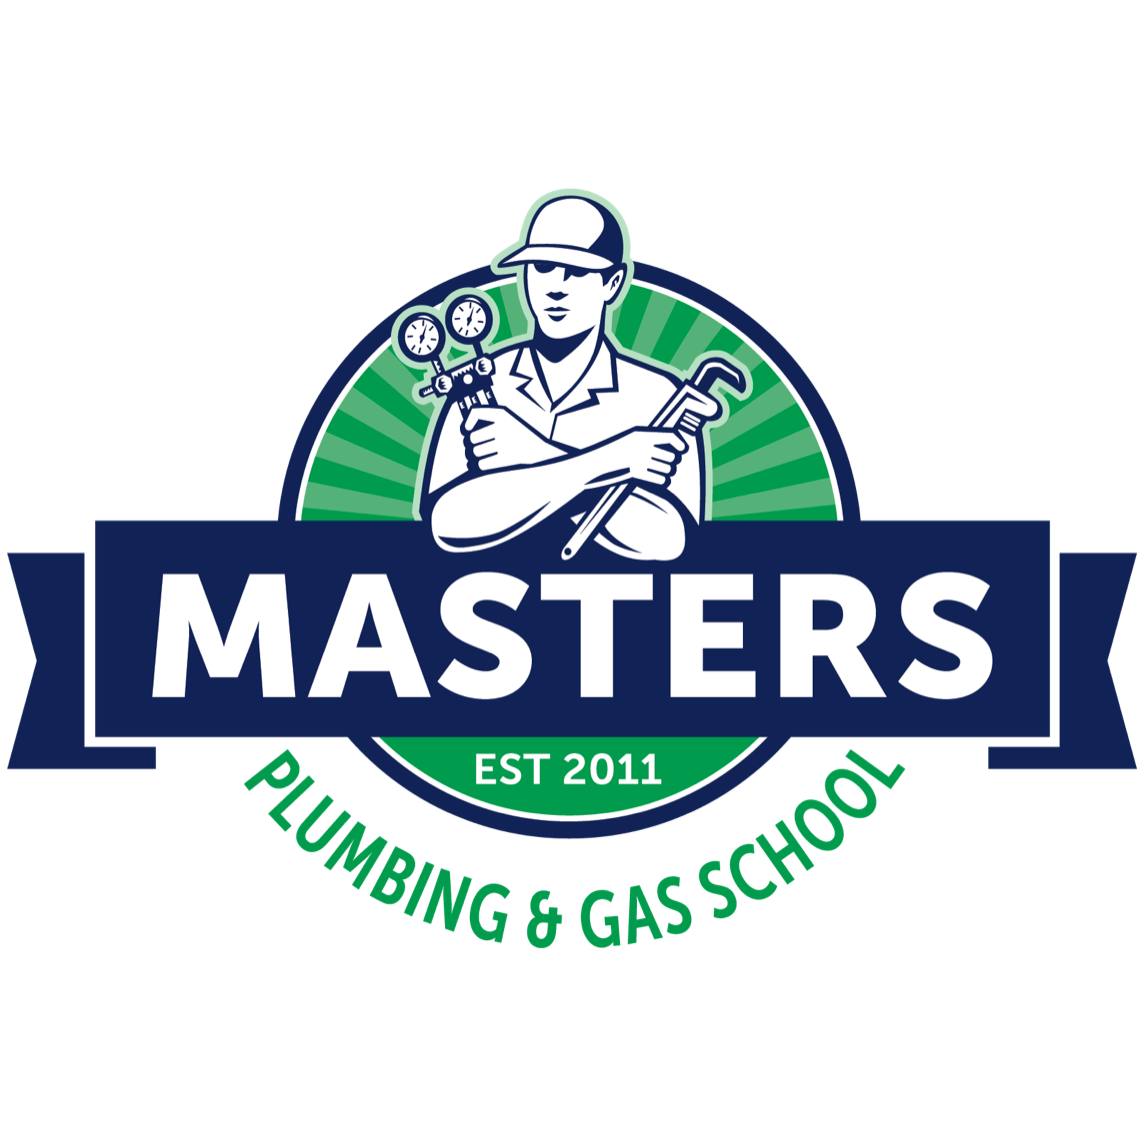 Masters Plumbing & Gas School